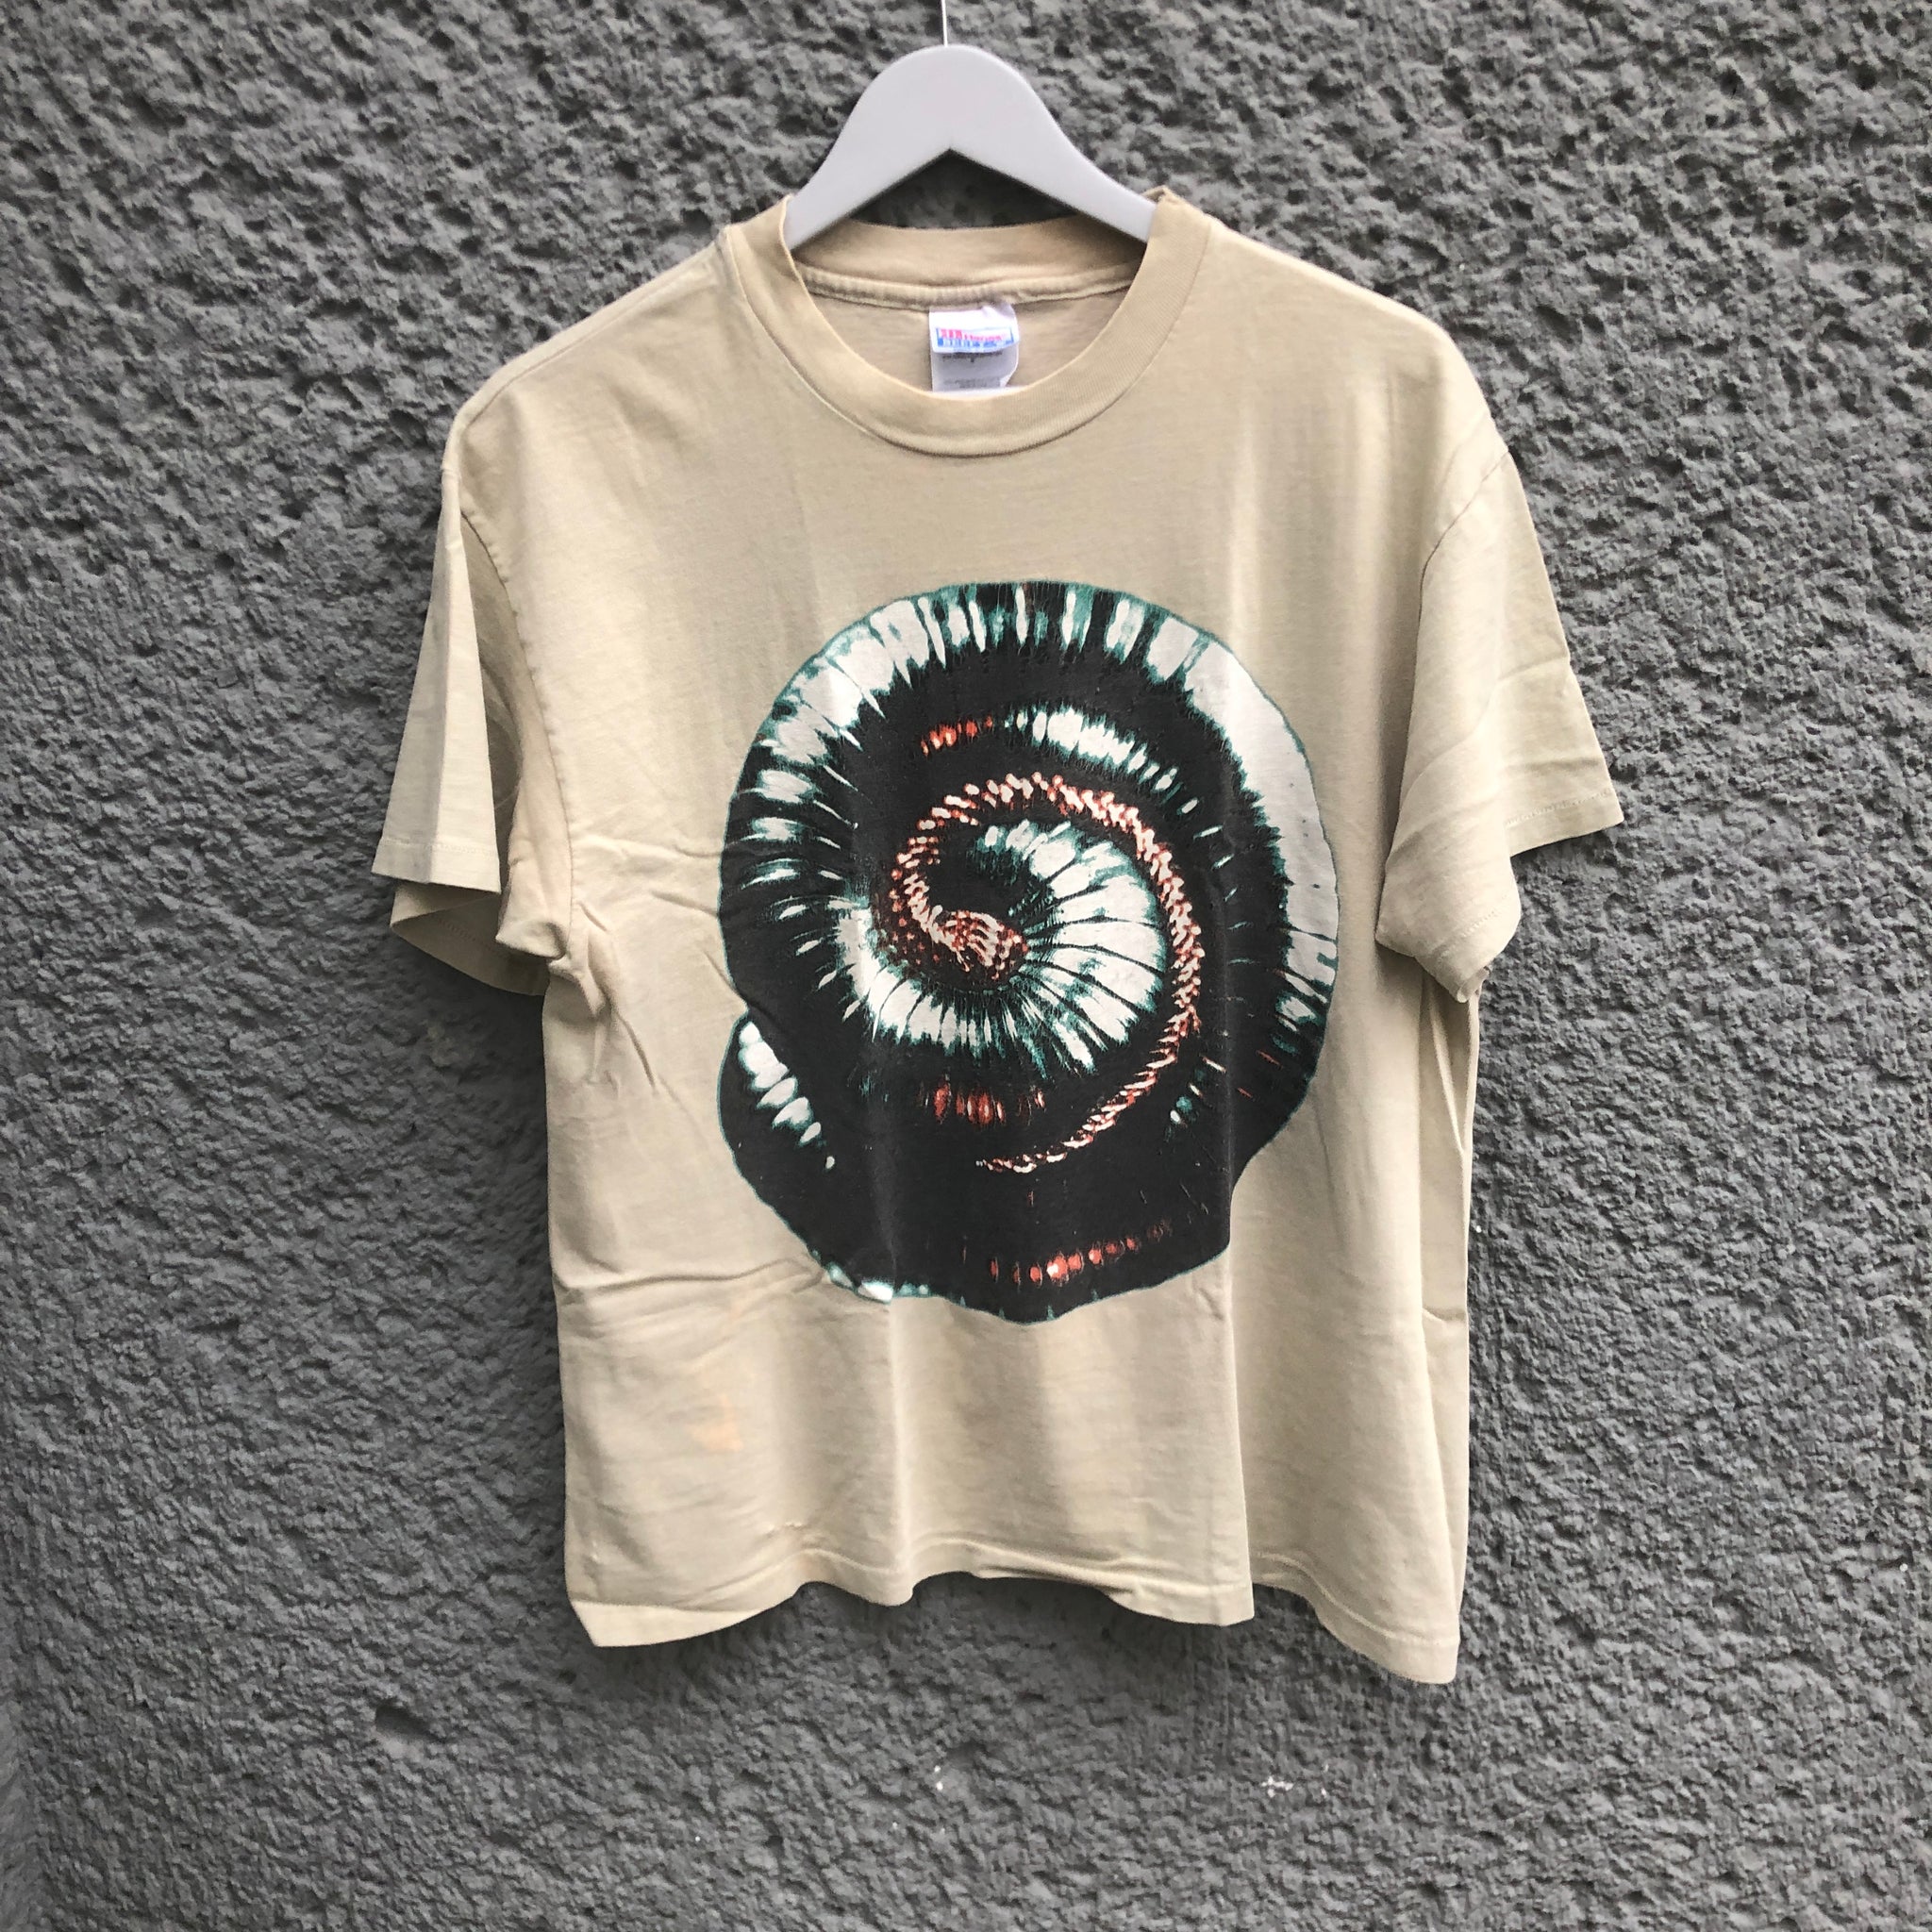 Nine Inch Nails Beige T-Shirt "Closer" 1994